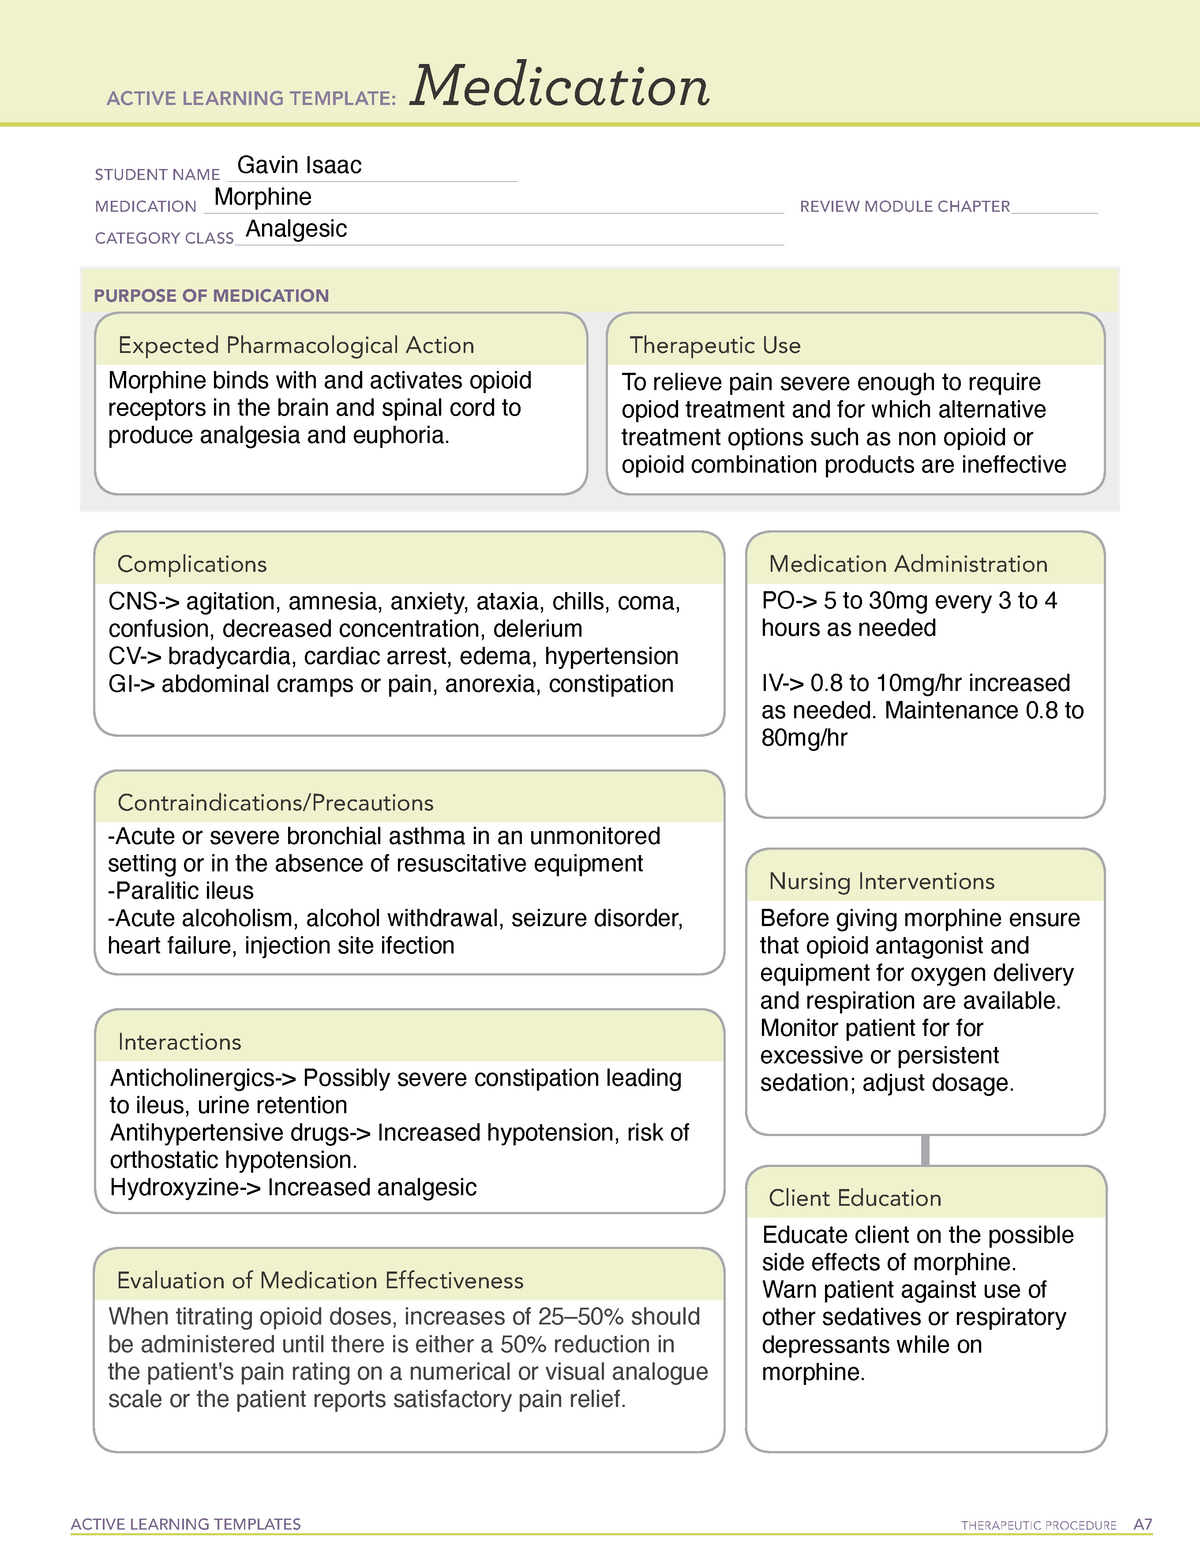 acetaminophen-medication-template